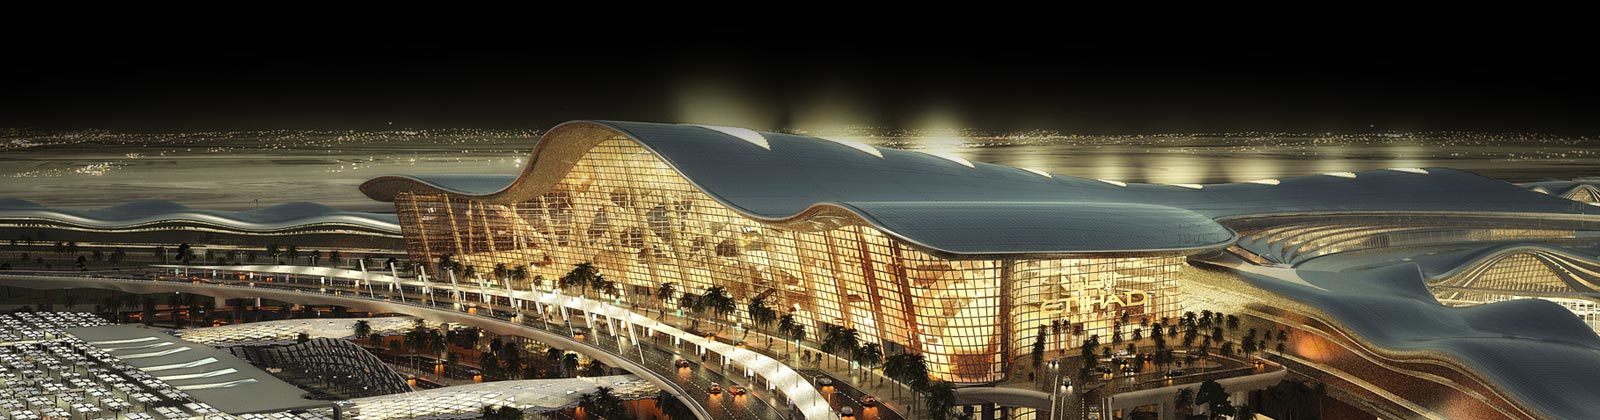 Abu Dhabi Terminal View 1